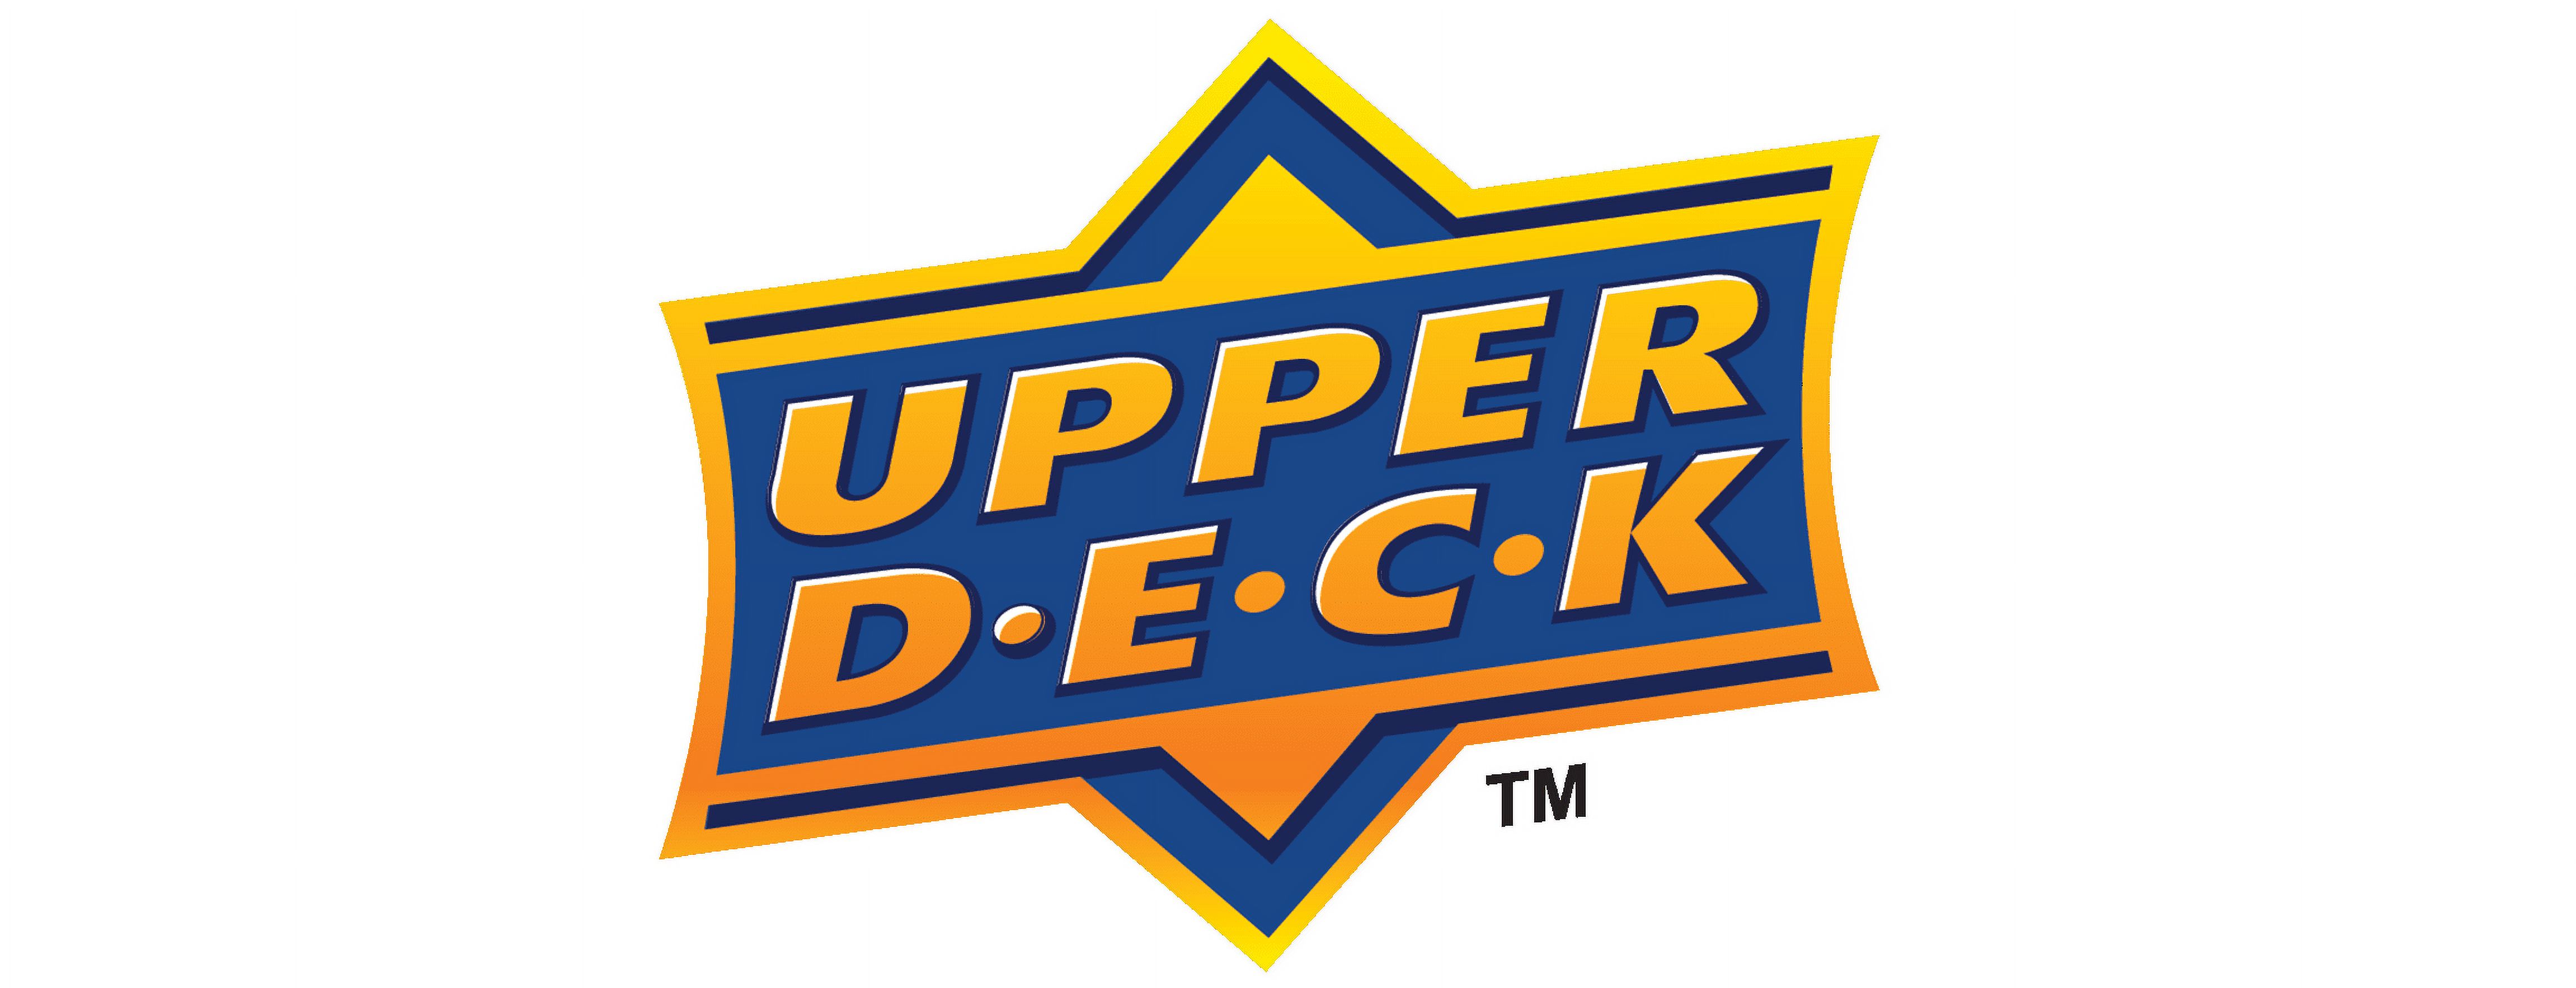 21-22 Upper Deck Parkhurst Blaster Box Hockey Trading Cards - image 3 of 3